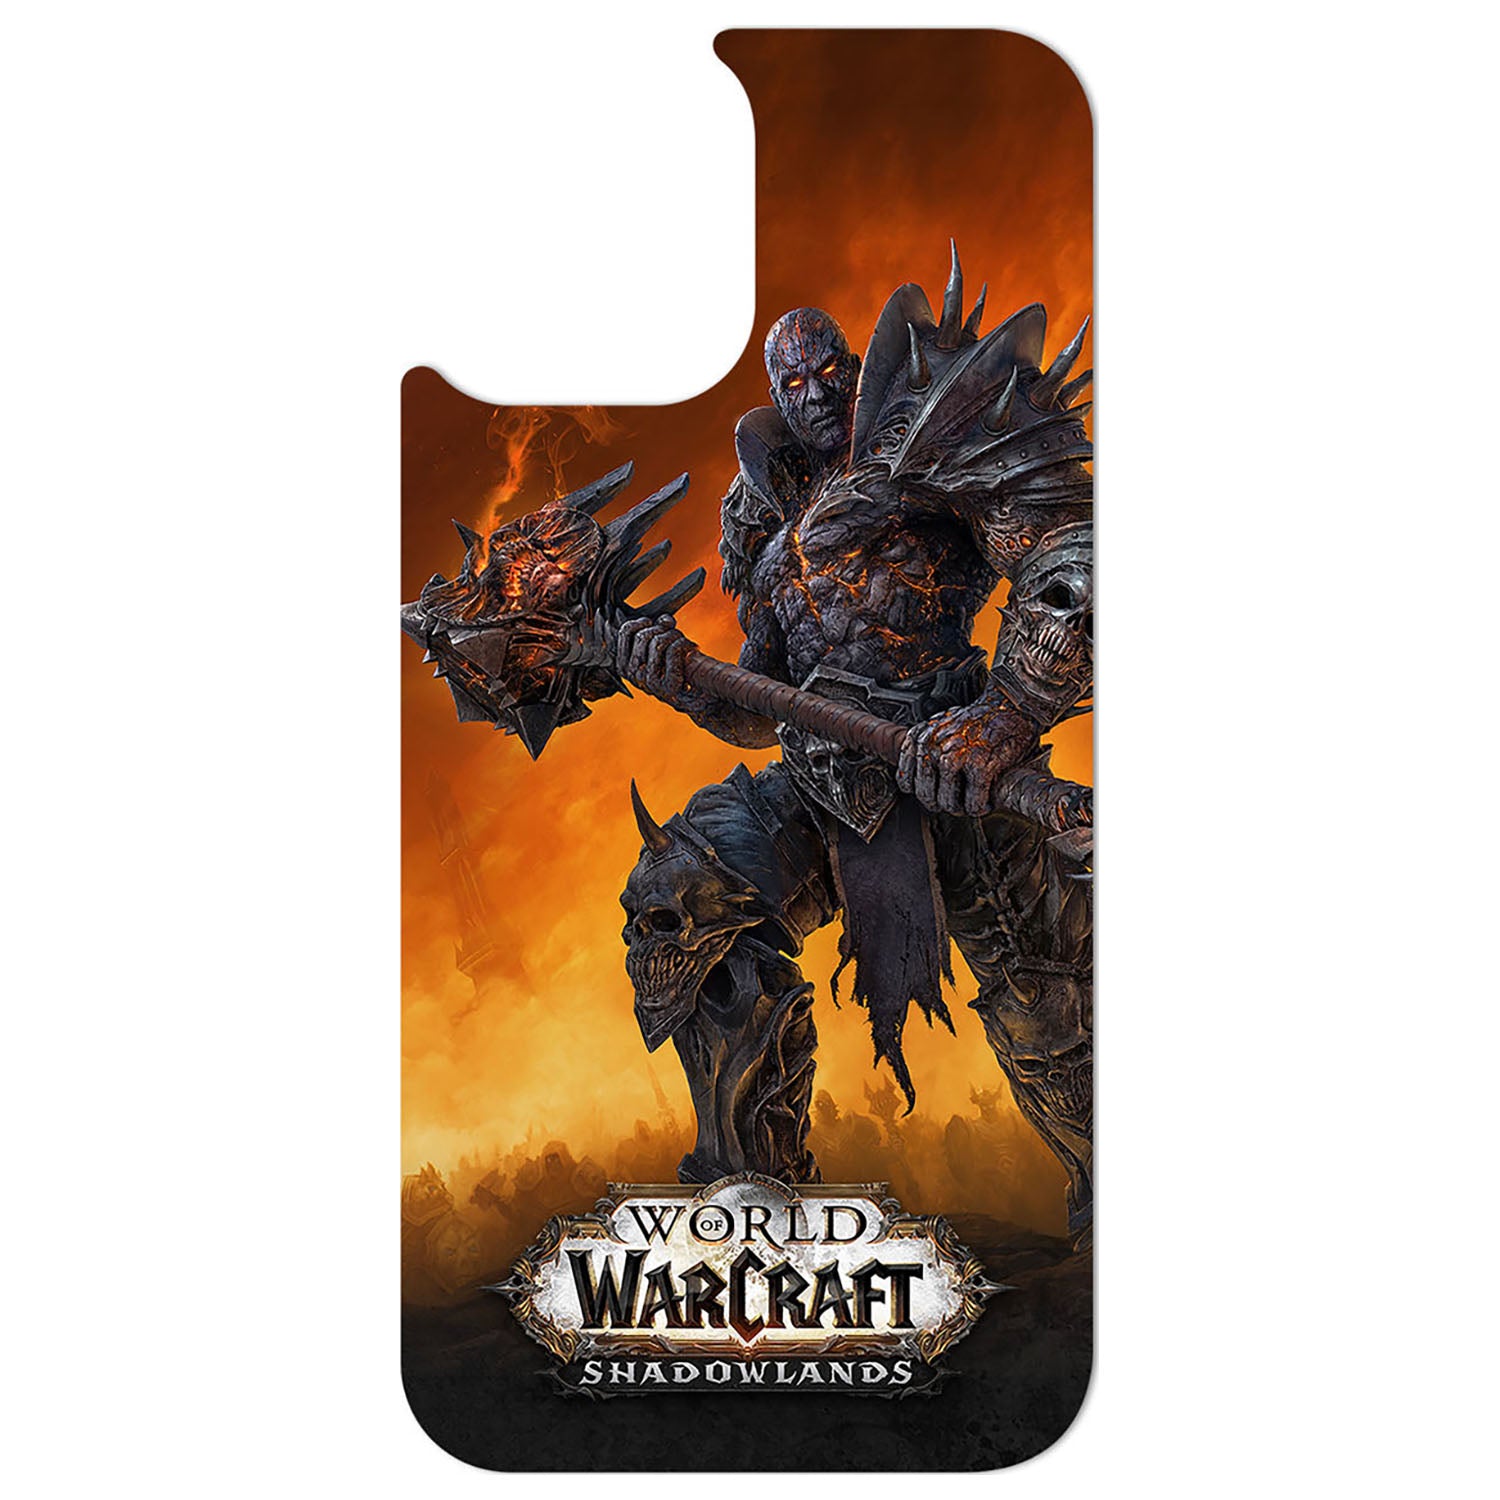 World of Warcraft Shadowlands InfiniteSwap Phone Cover Pack - Bolvar Fordragon Swap